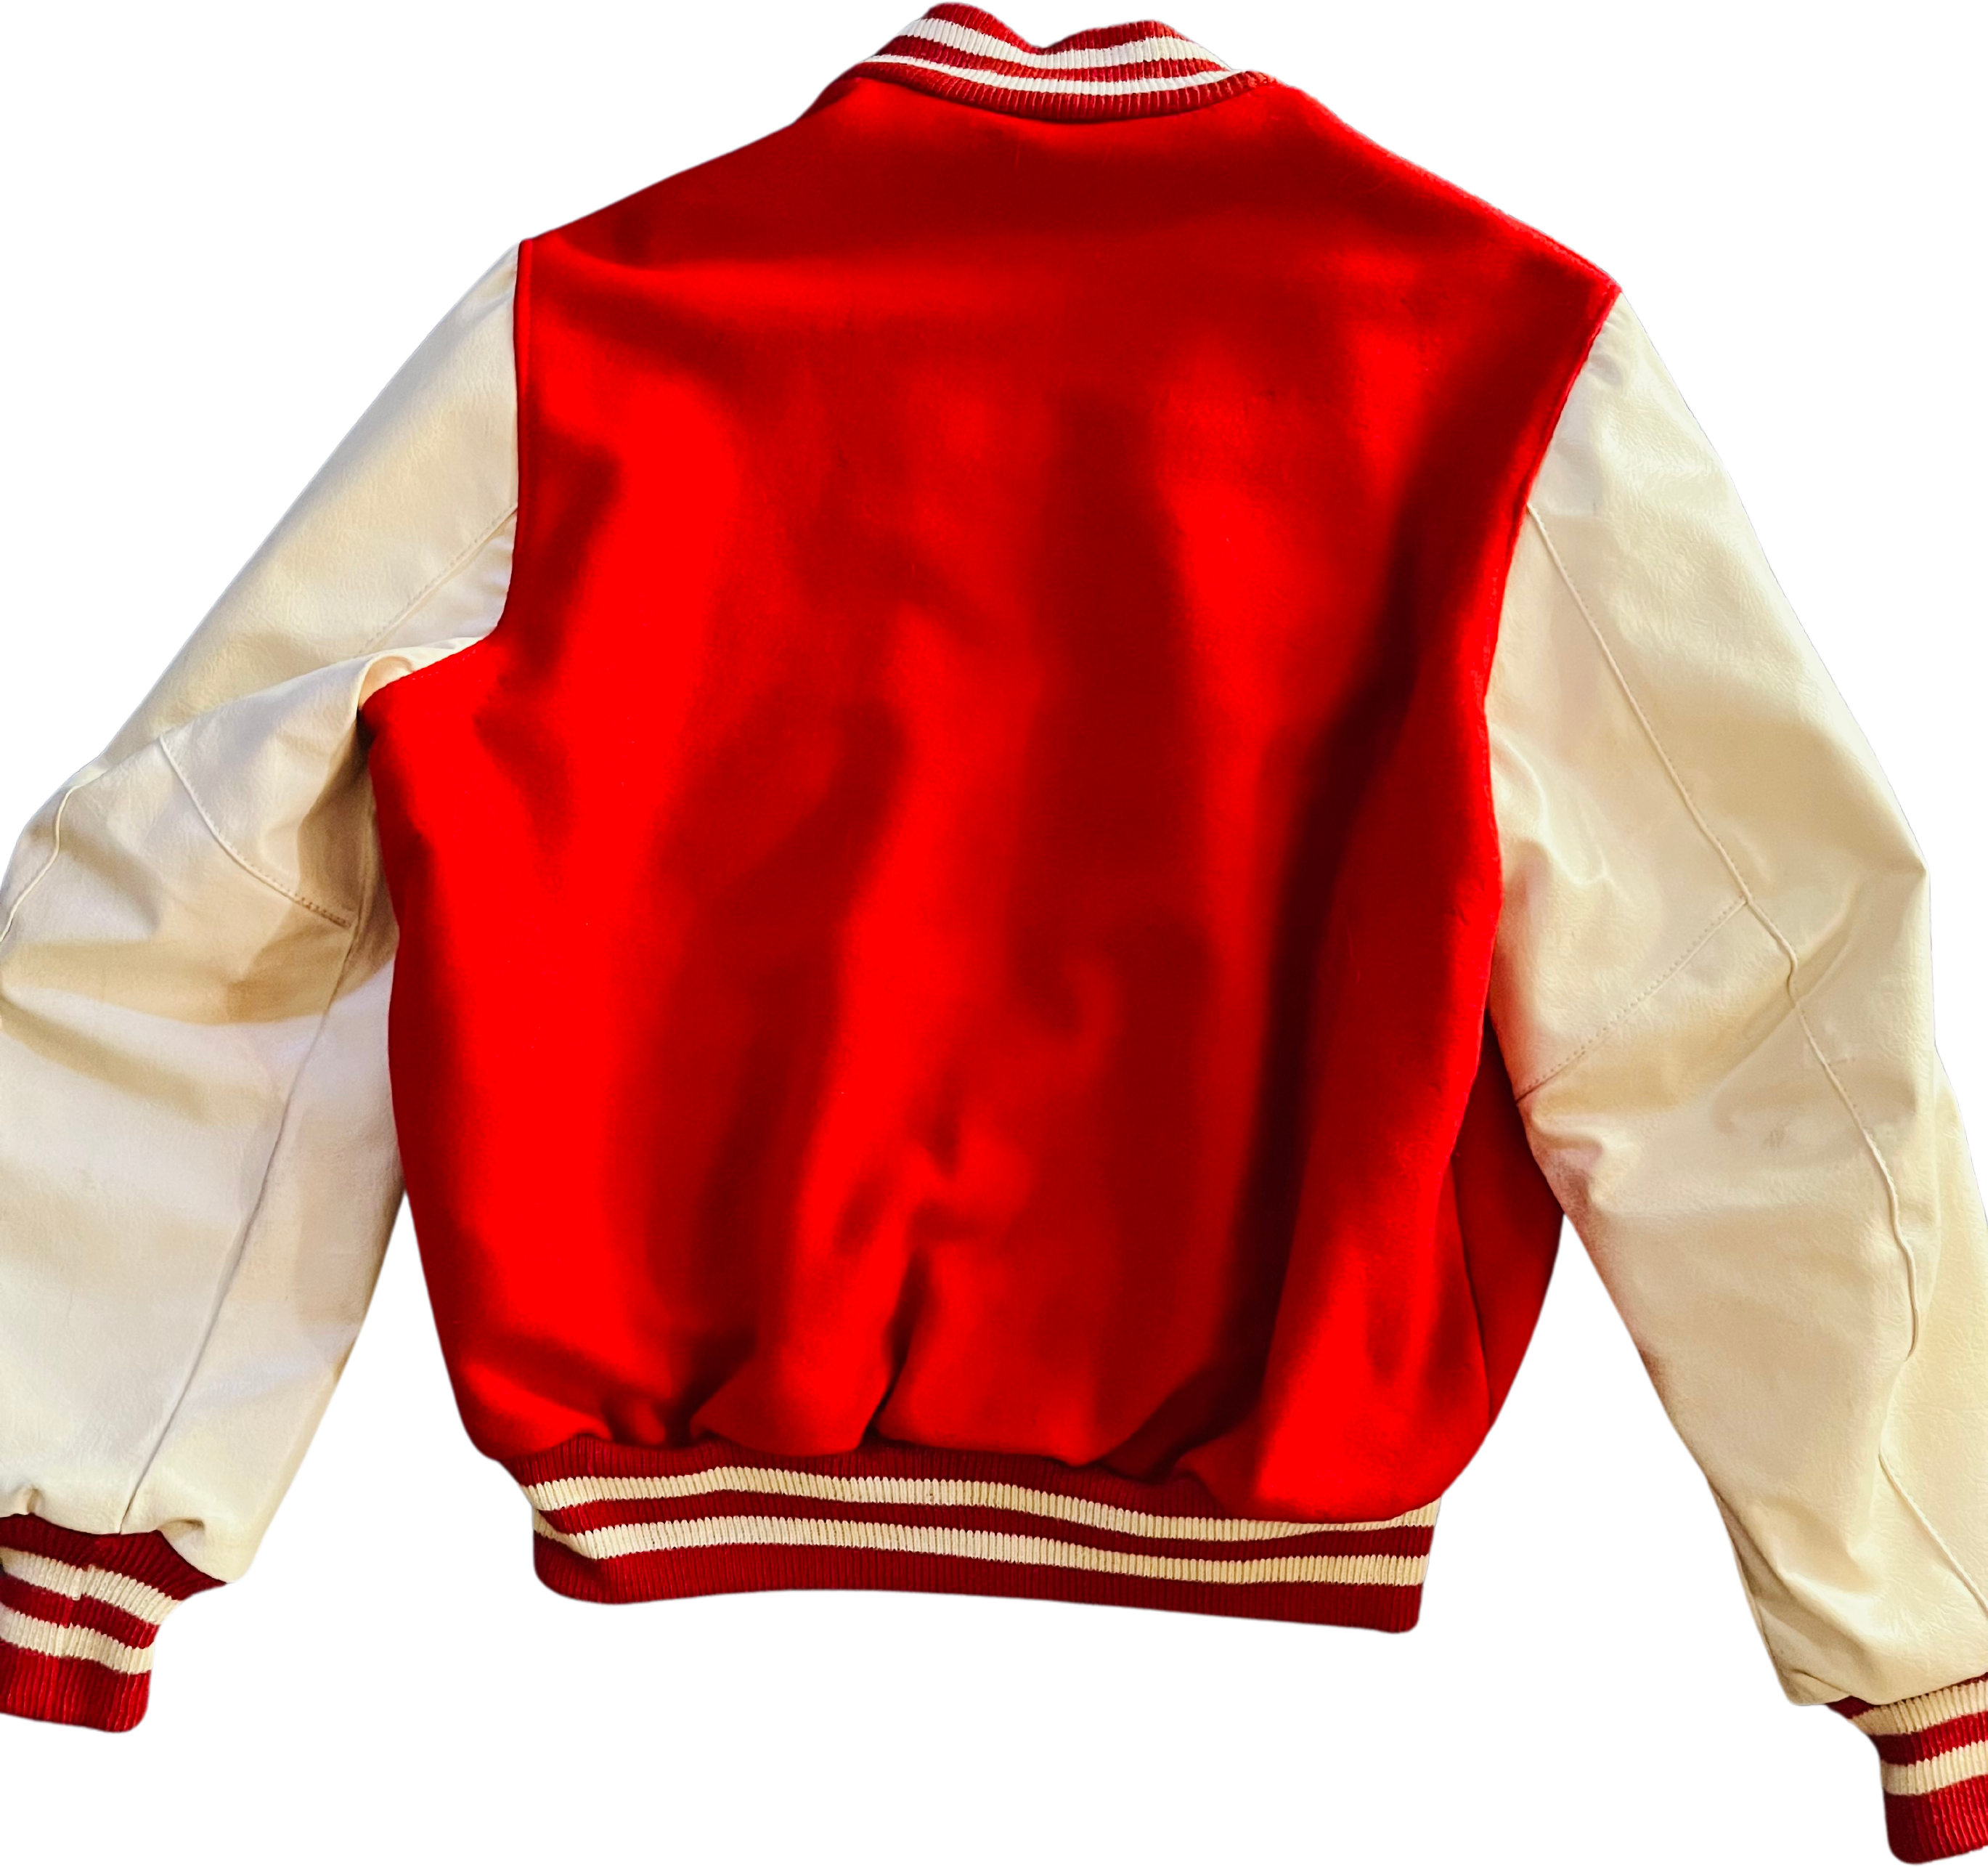 Louisville Slugger Vintage 80s Baseball Varsity Jacket Leather and Wool Red  and Cream Heavy Bomber Style Coat Size Large